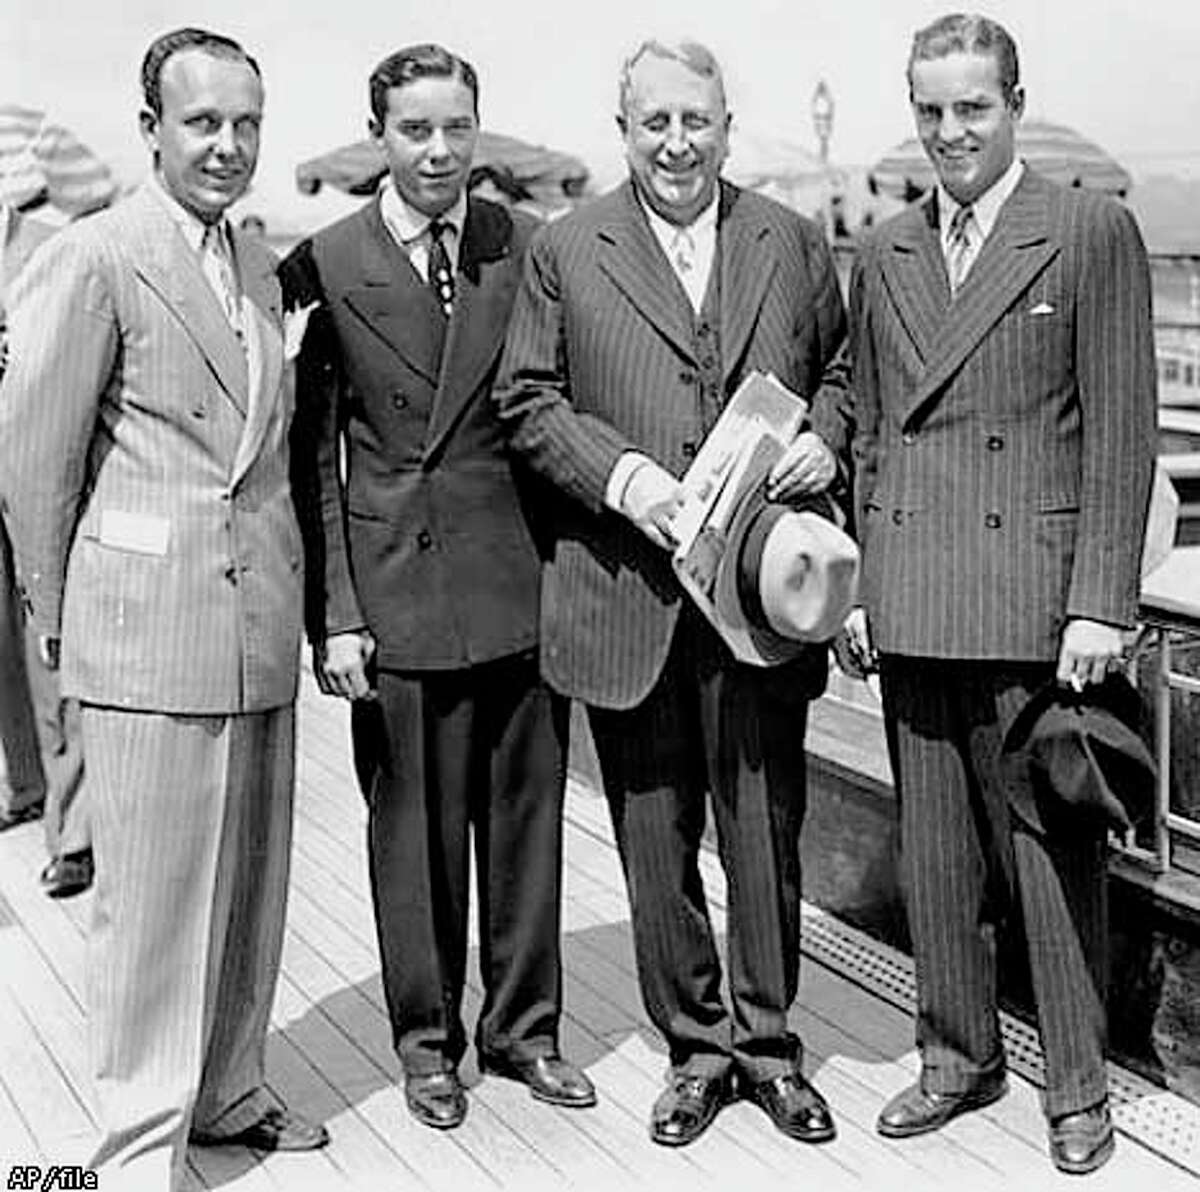 William Randolph Hearst Jr., Cal. Hearst Jr., left, is seen with David Hearst, William Randolph Hearst Sr., and Randolph Apperson Hearst in 1936.